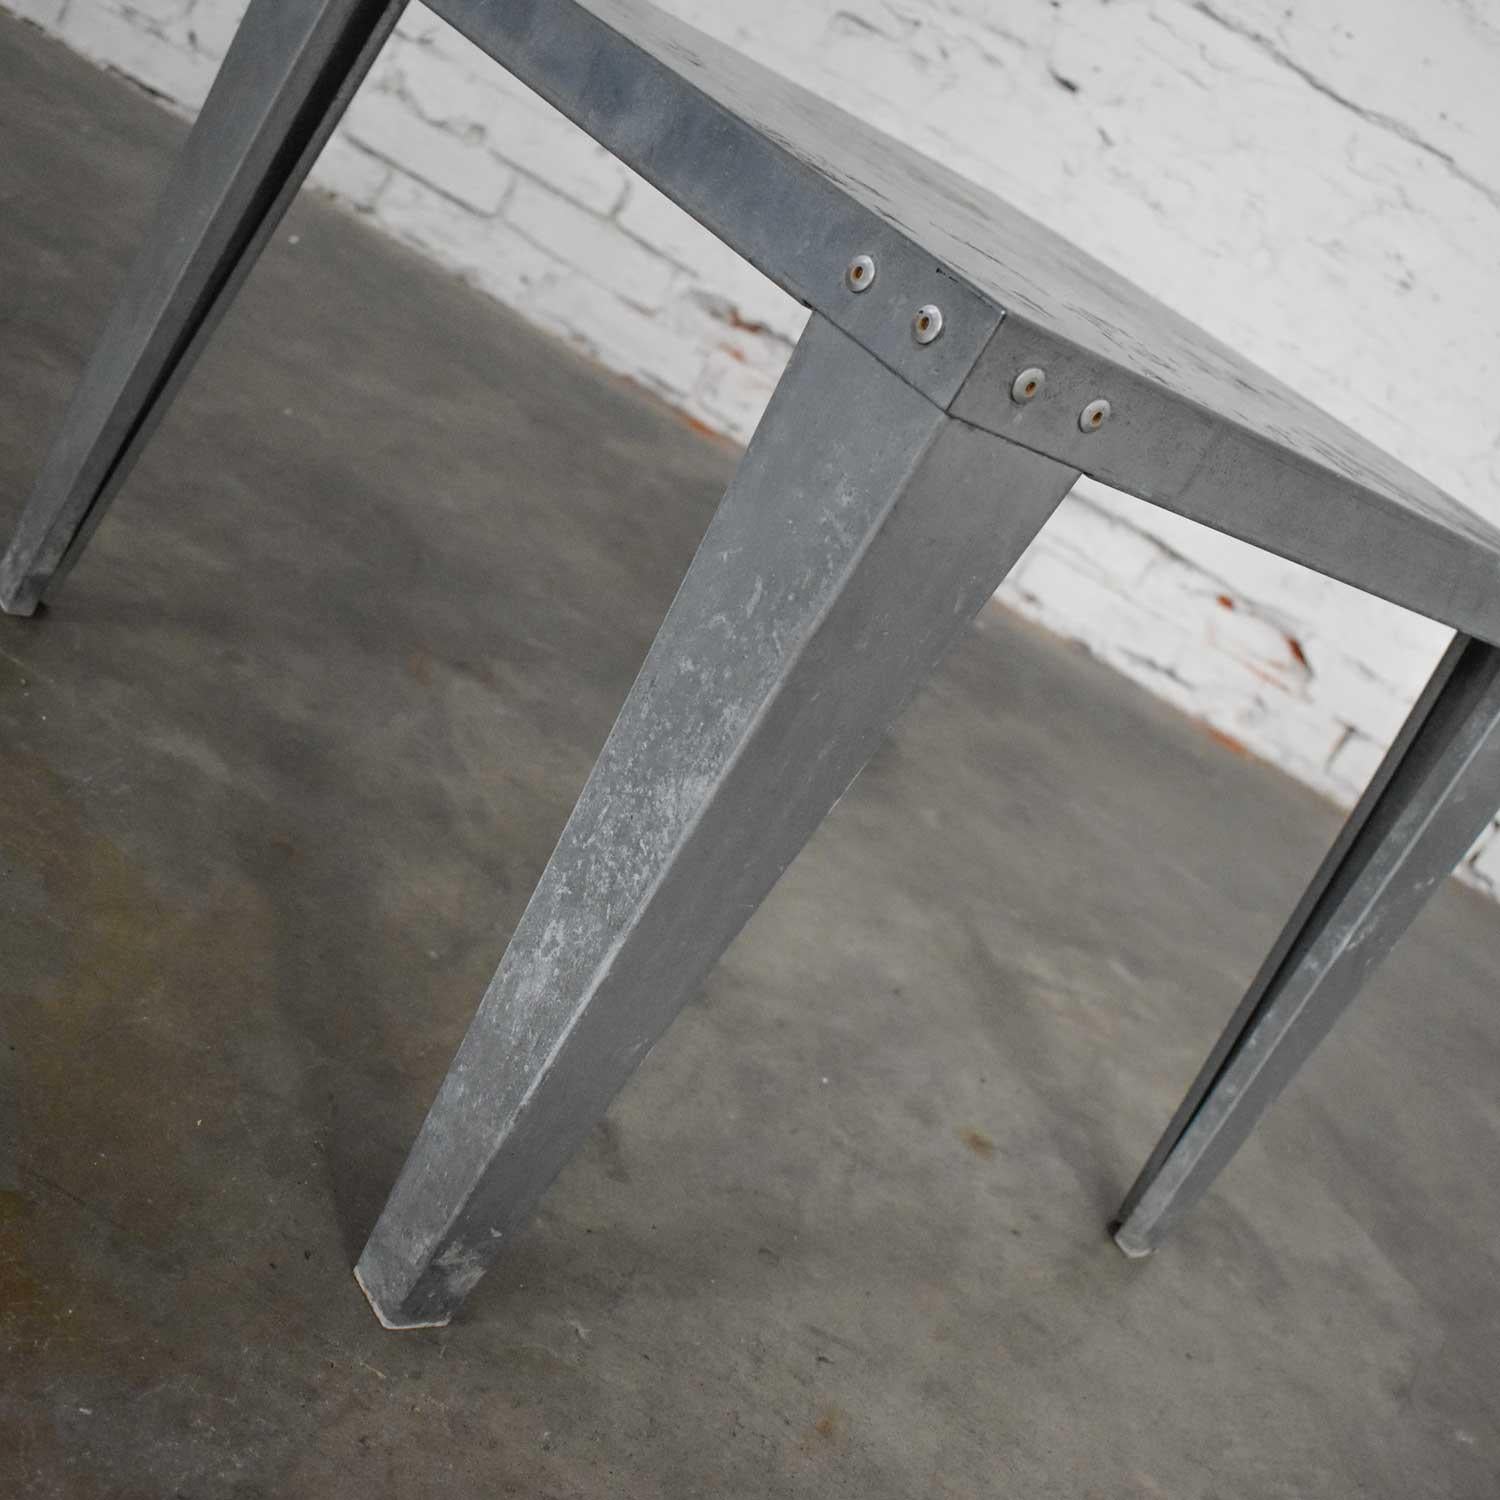 galvanized table